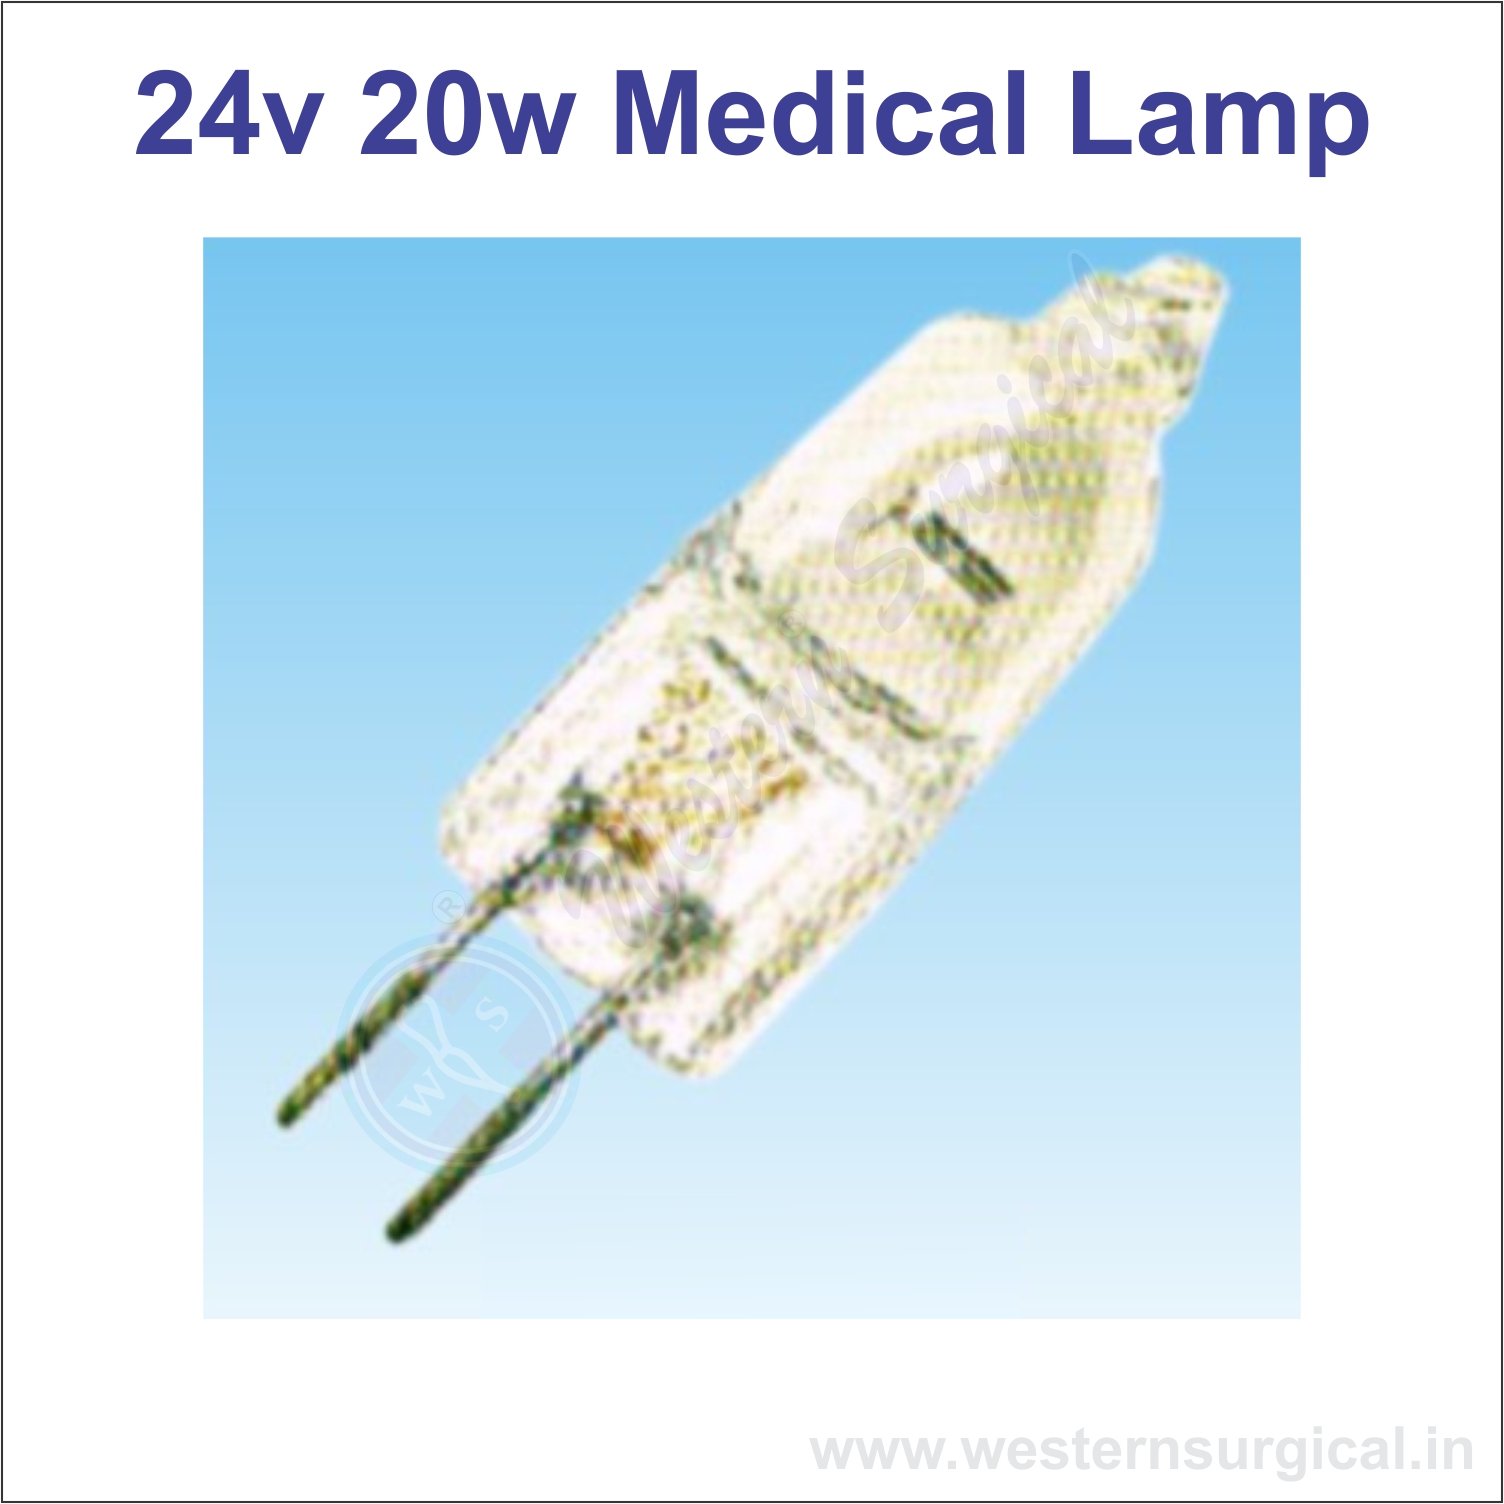  24V 20W Medical Lamp